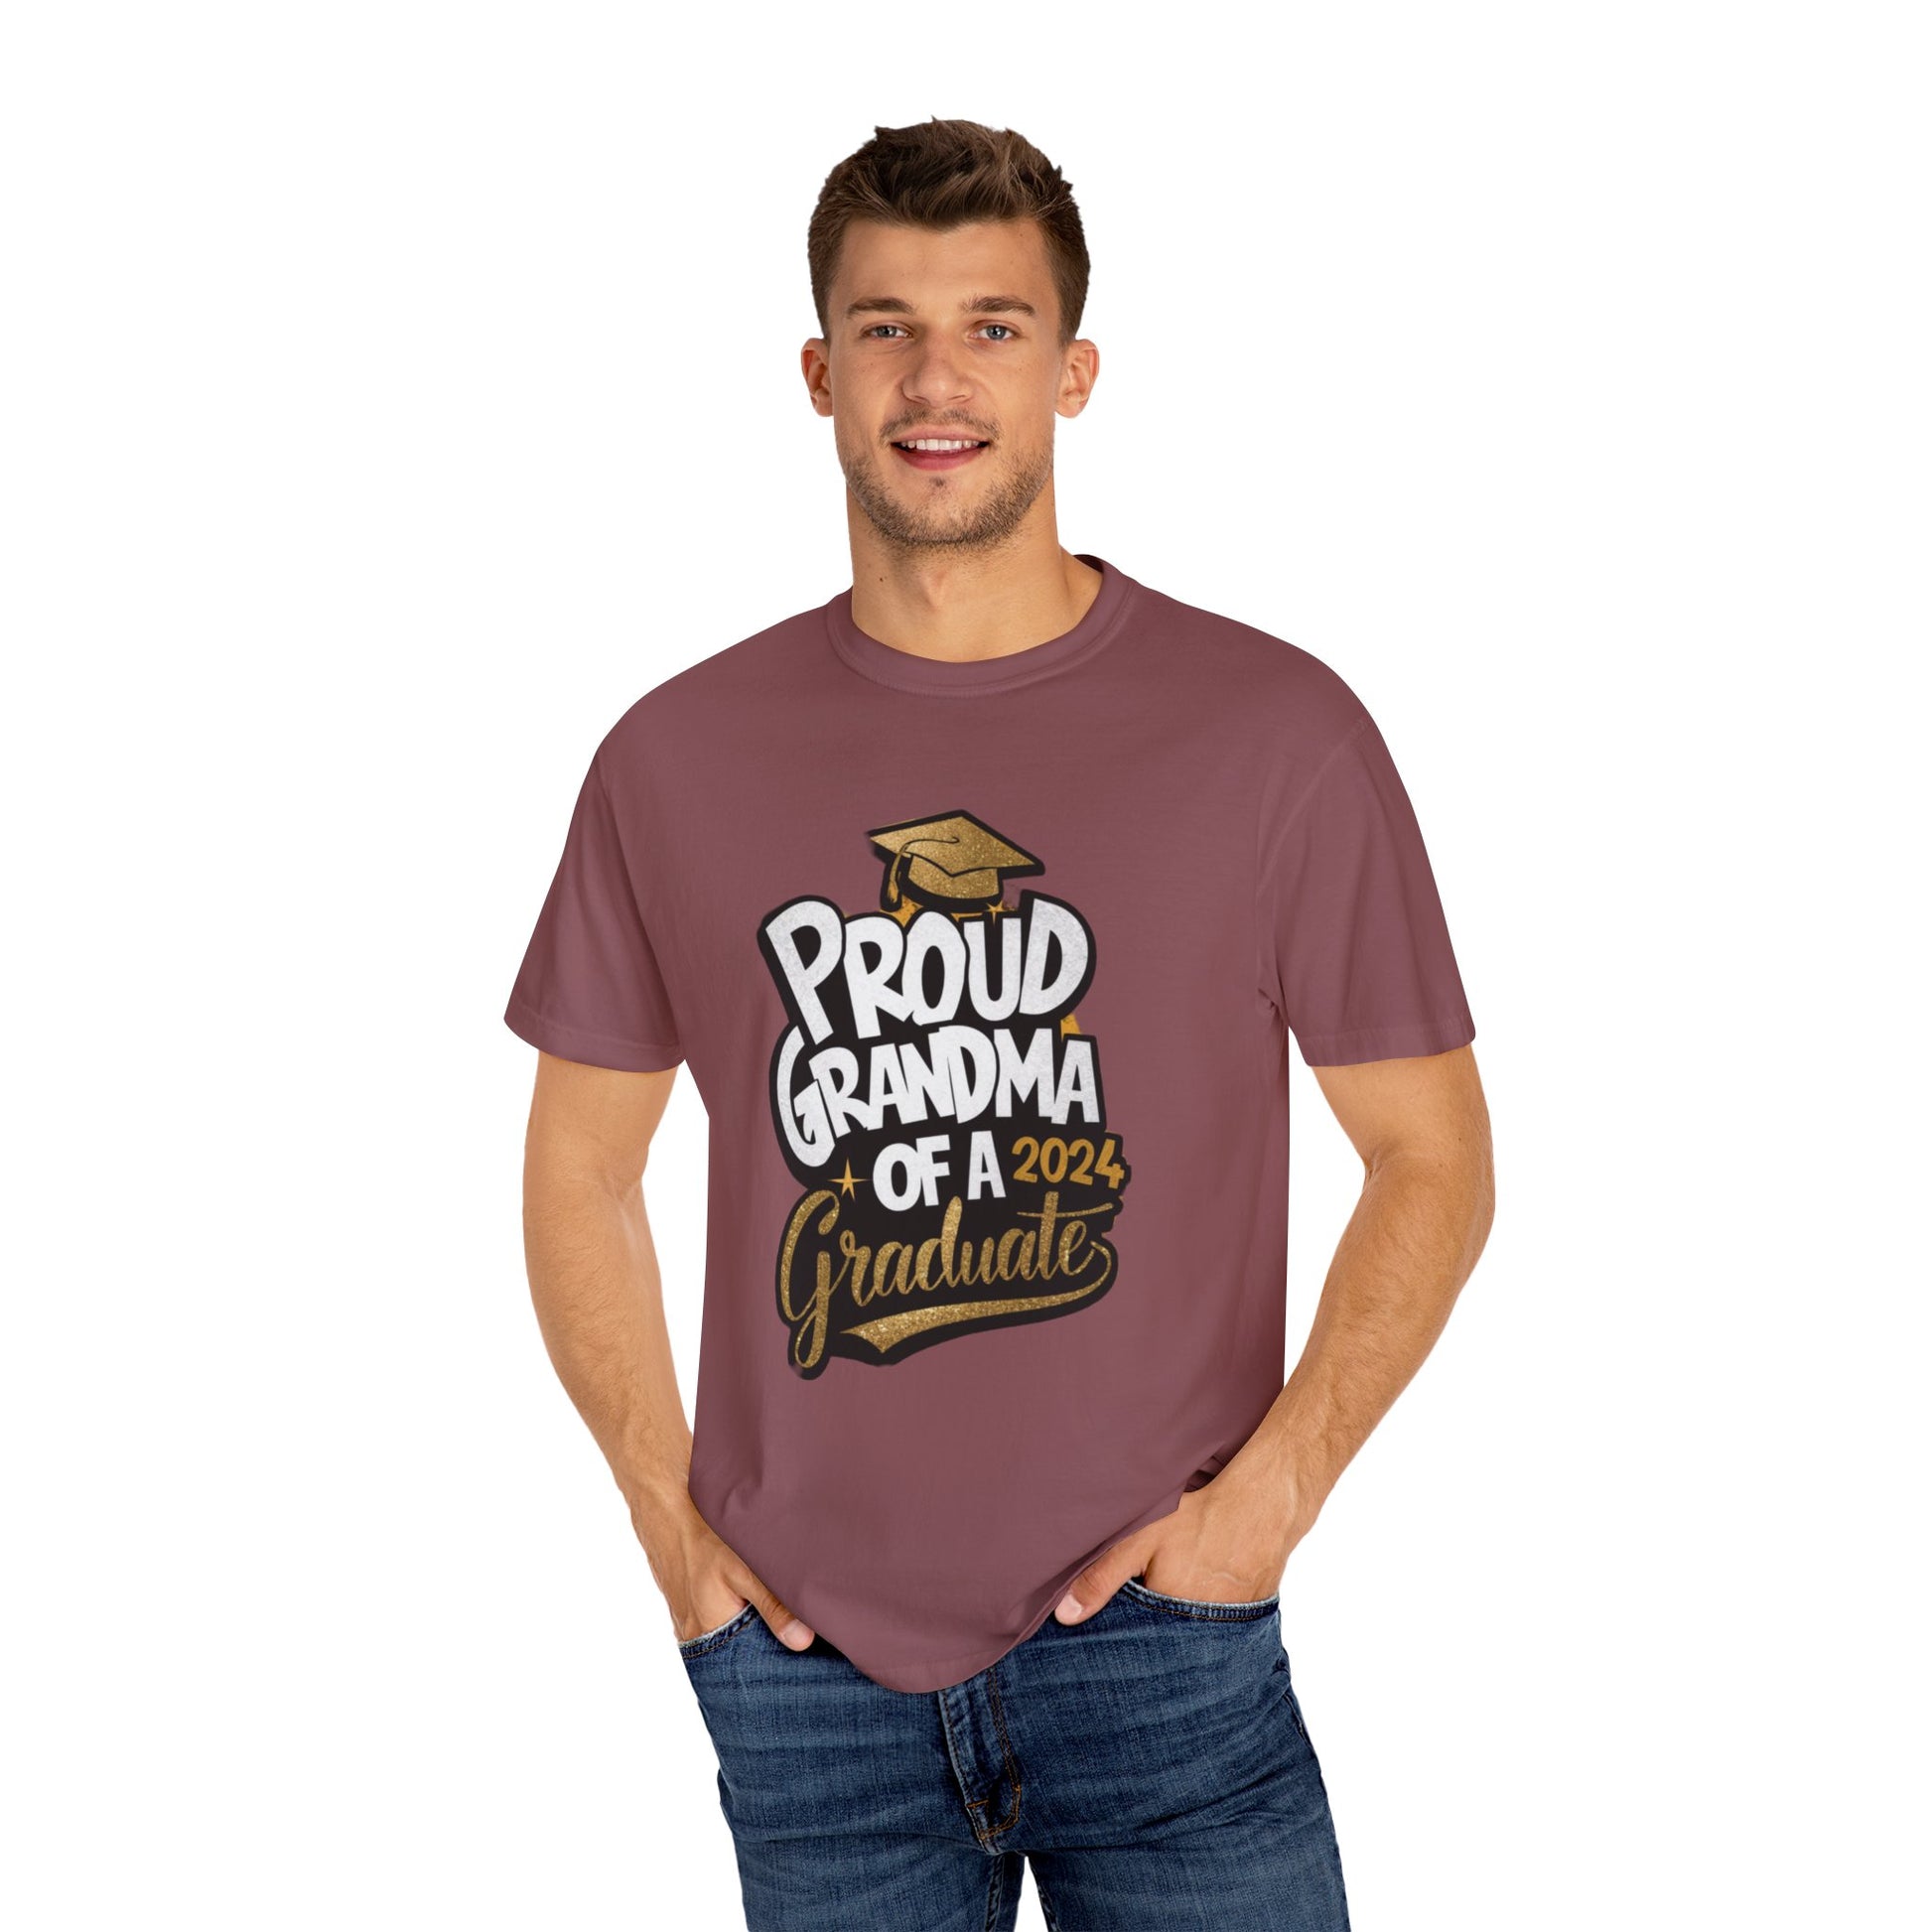 Proud of Grandma 2024 Graduate Unisex Garment-dyed T-shirt Cotton Funny Humorous Graphic Soft Premium Unisex Men Women Brick T-shirt Birthday Gift-30